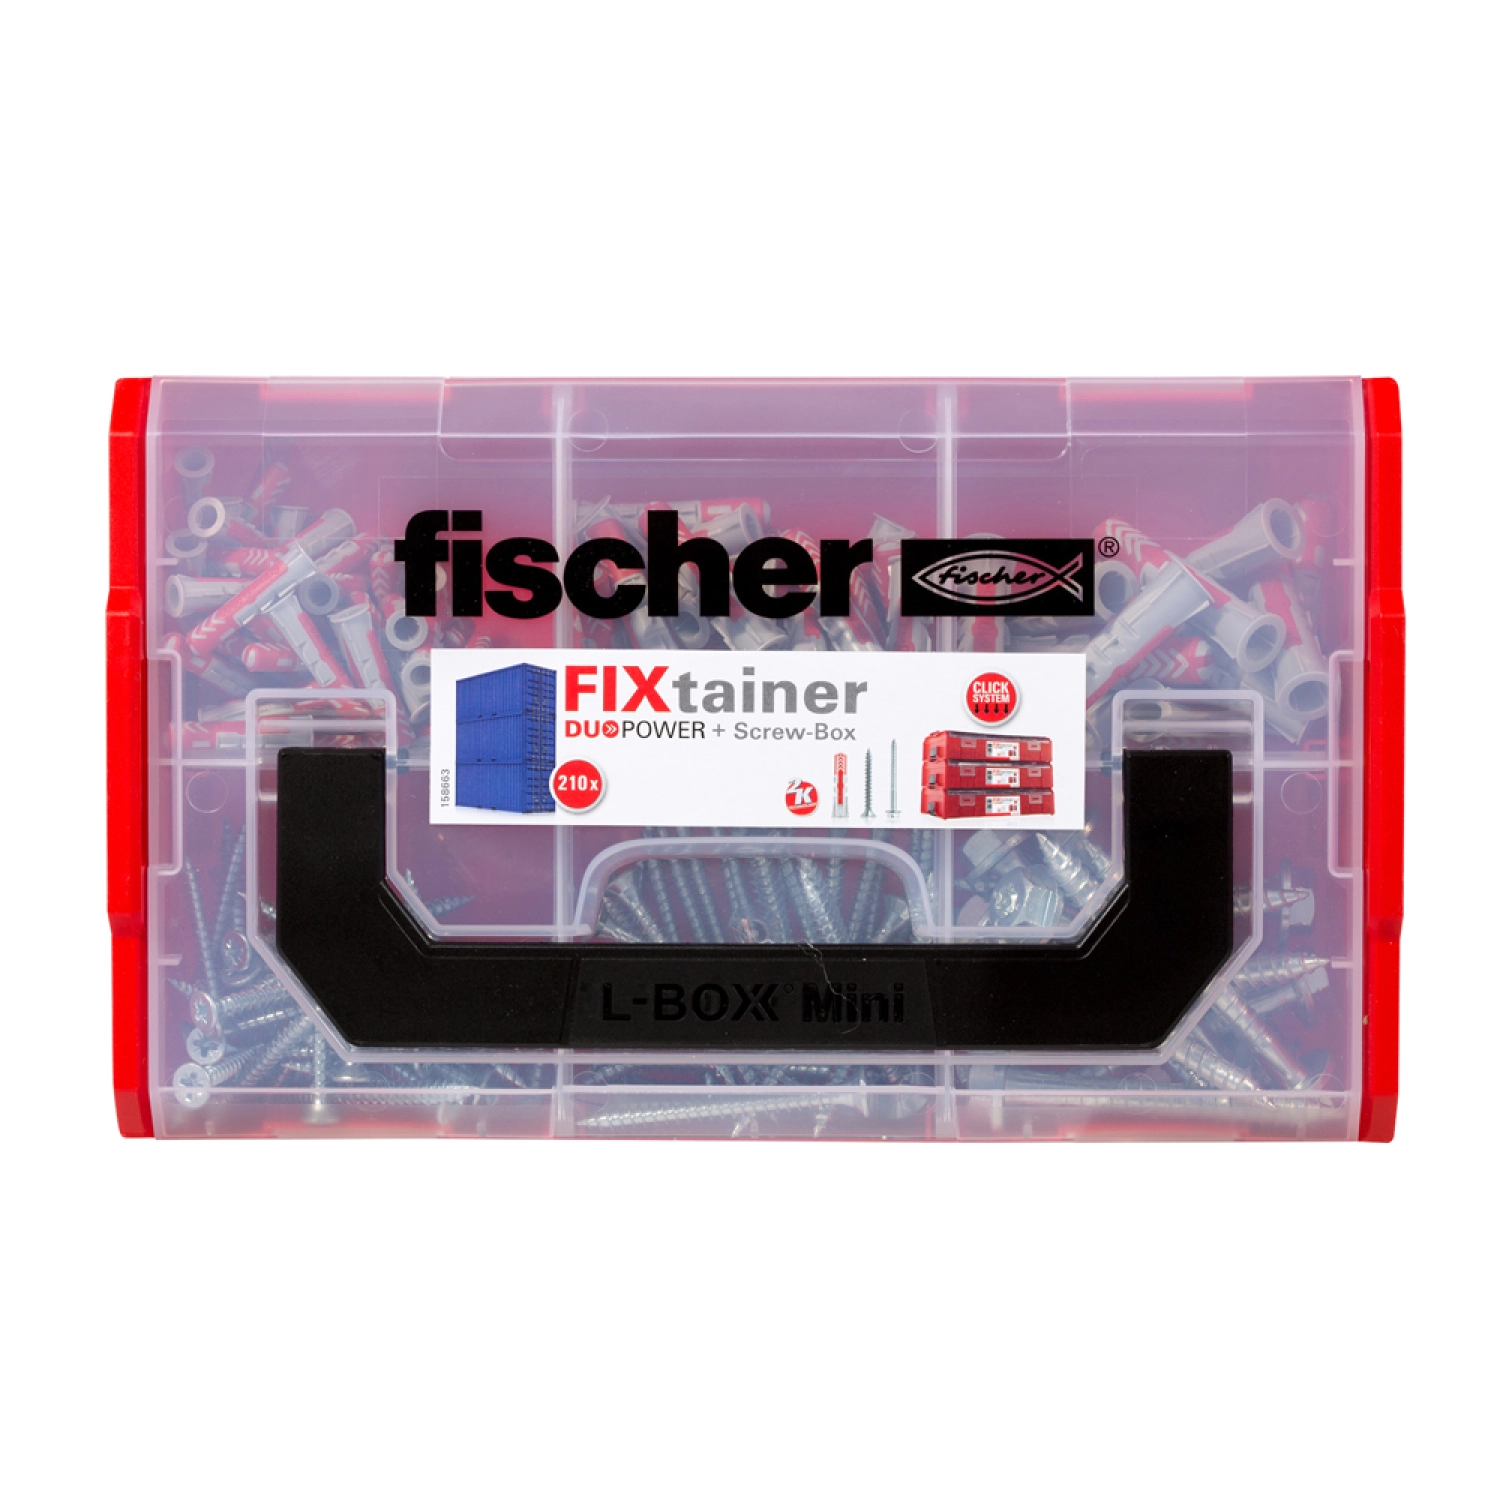 fischer 536162 - fischer FixTainer - Chevilles tous matériaux fischer DuoPower avec vis (105pcs) FixTainer DuoPower avec vis